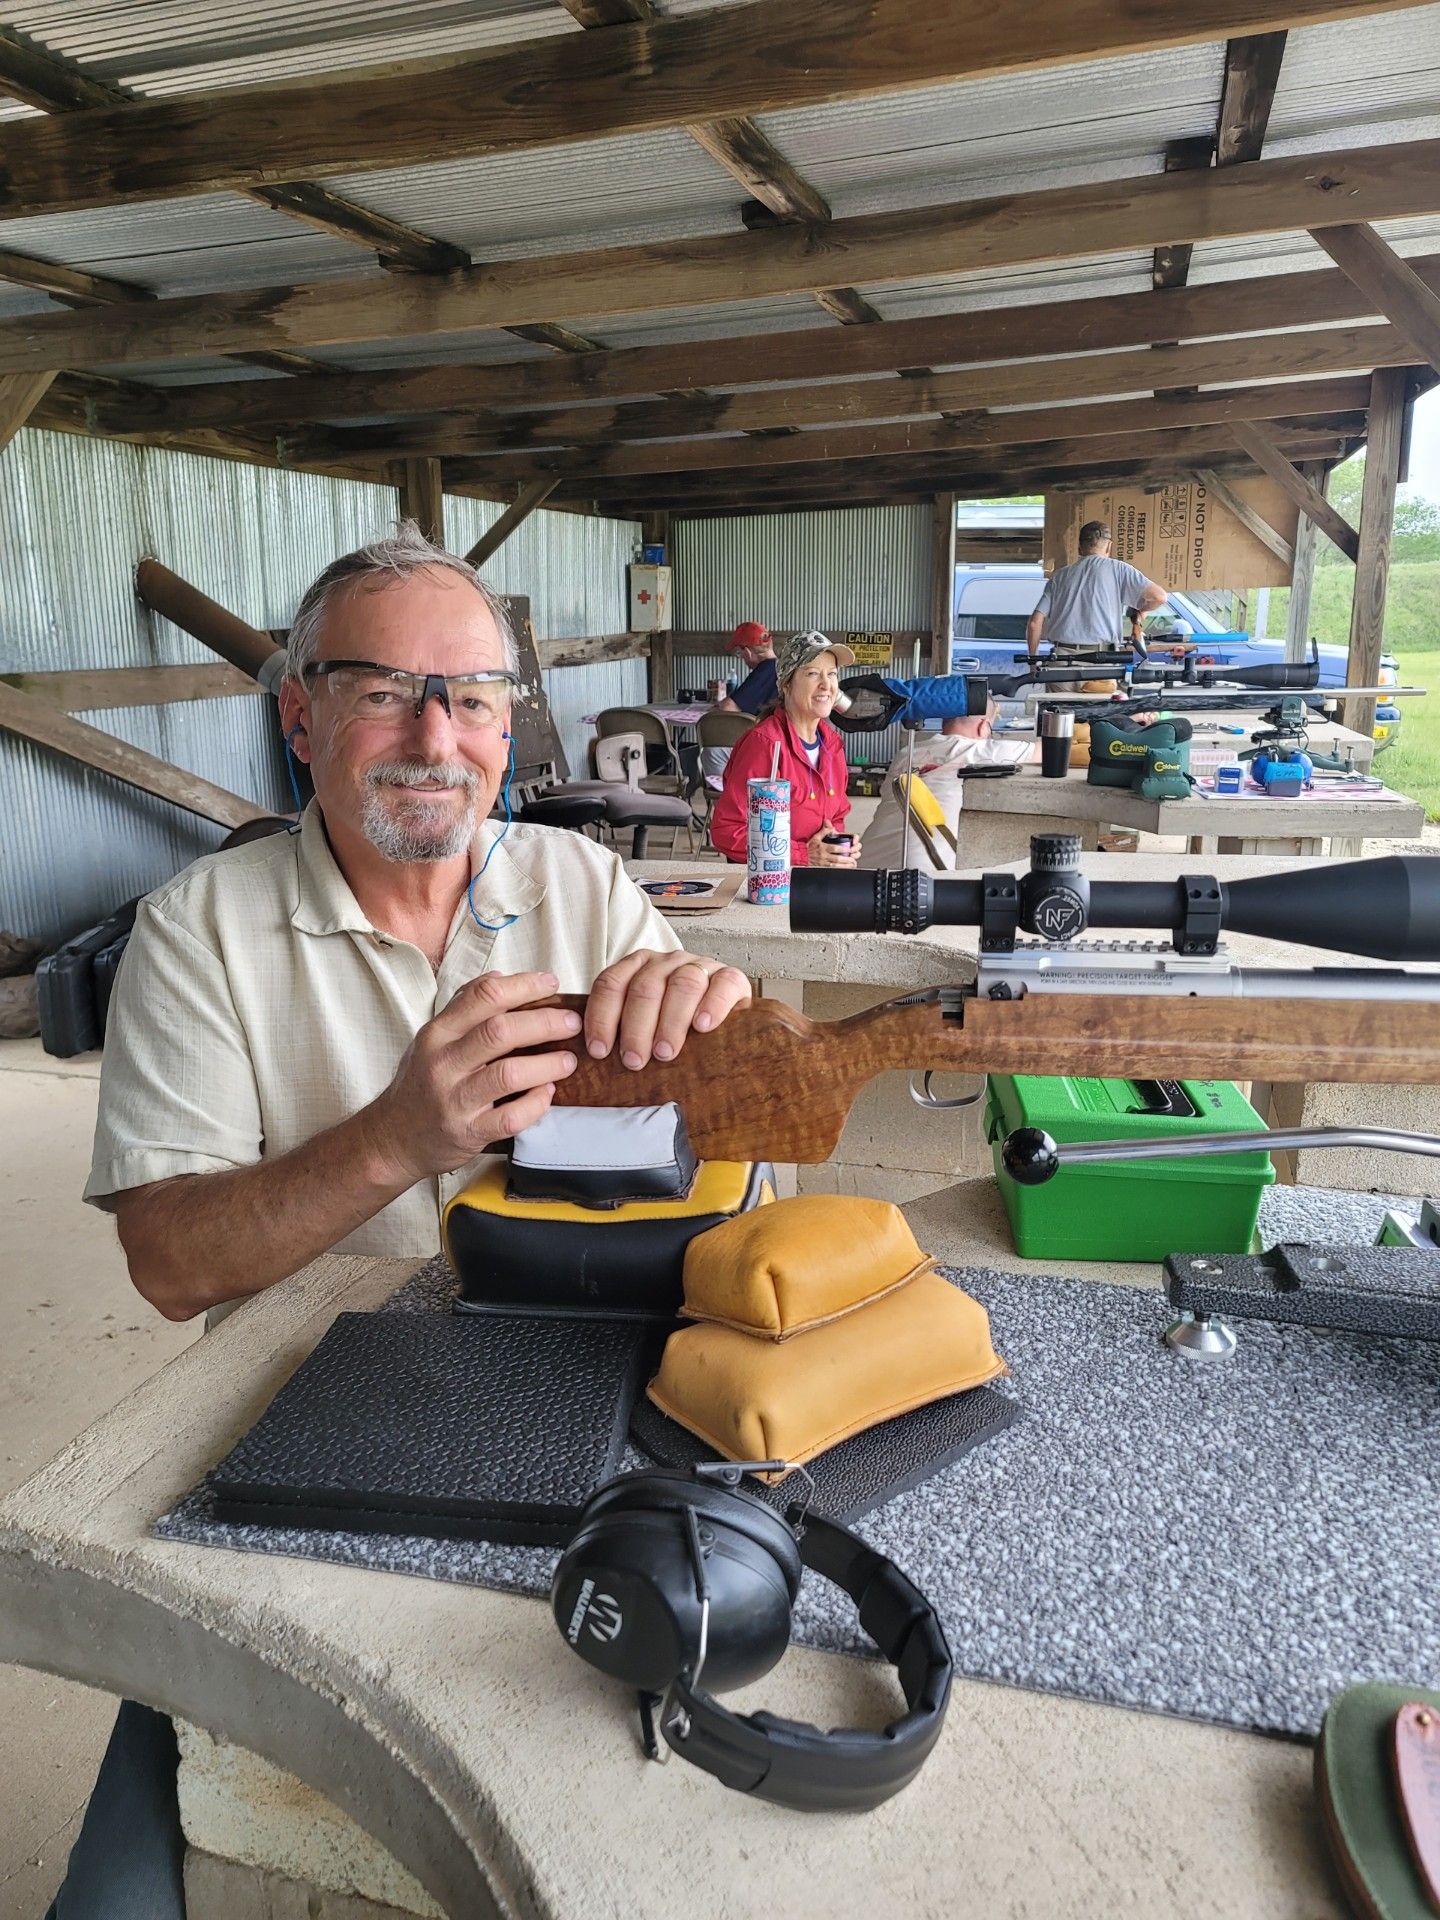 man wearing safety glasses smiling at camera holding a rifle at gun range table